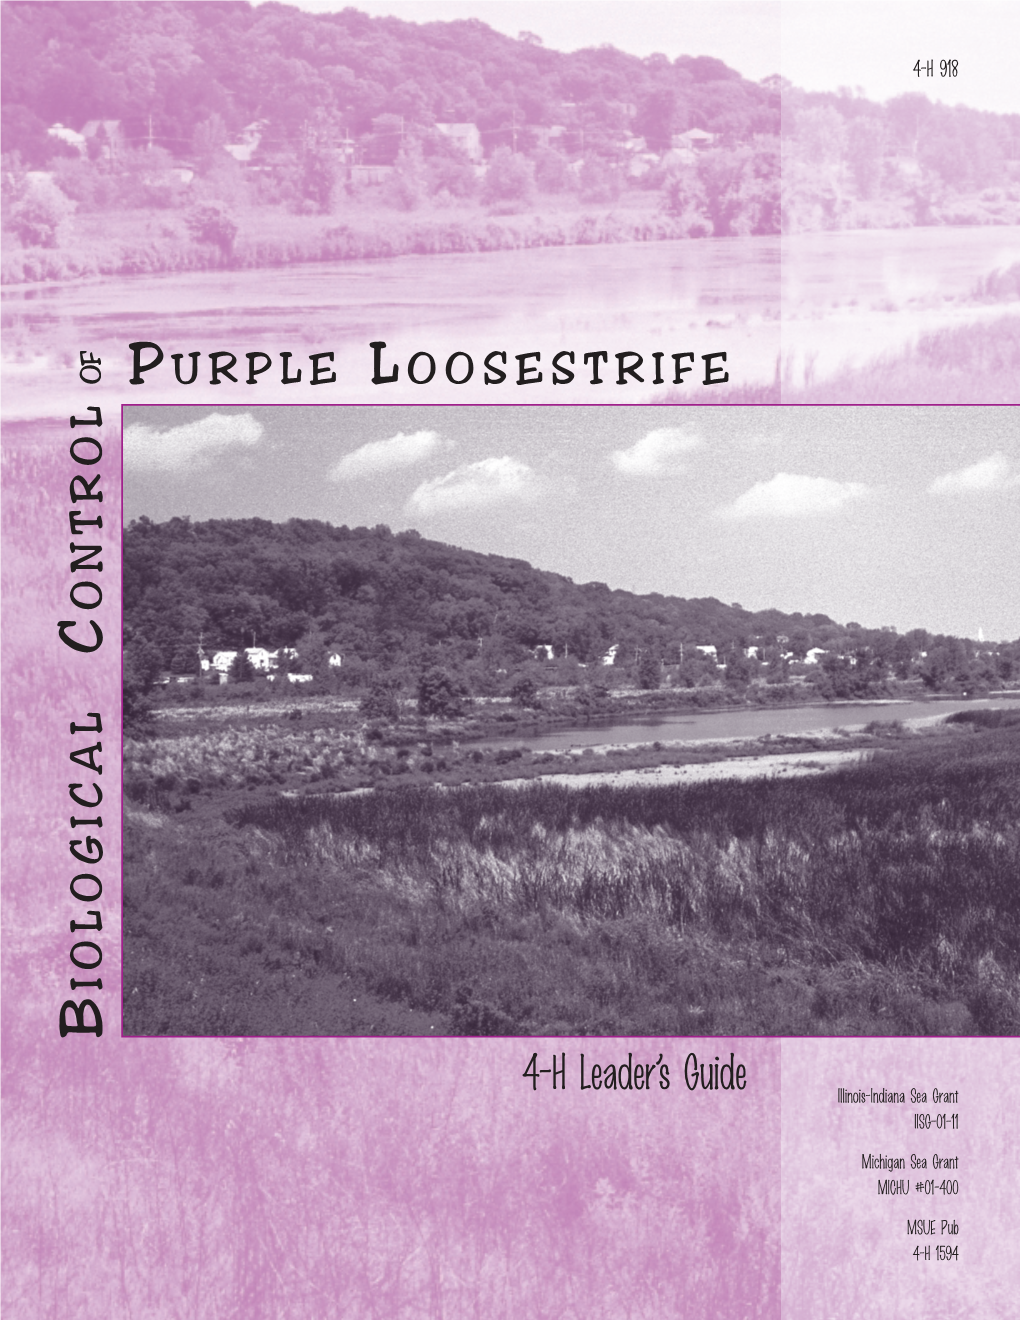 Biological Control of Purple Loosestrife 4-H Leaders Guide